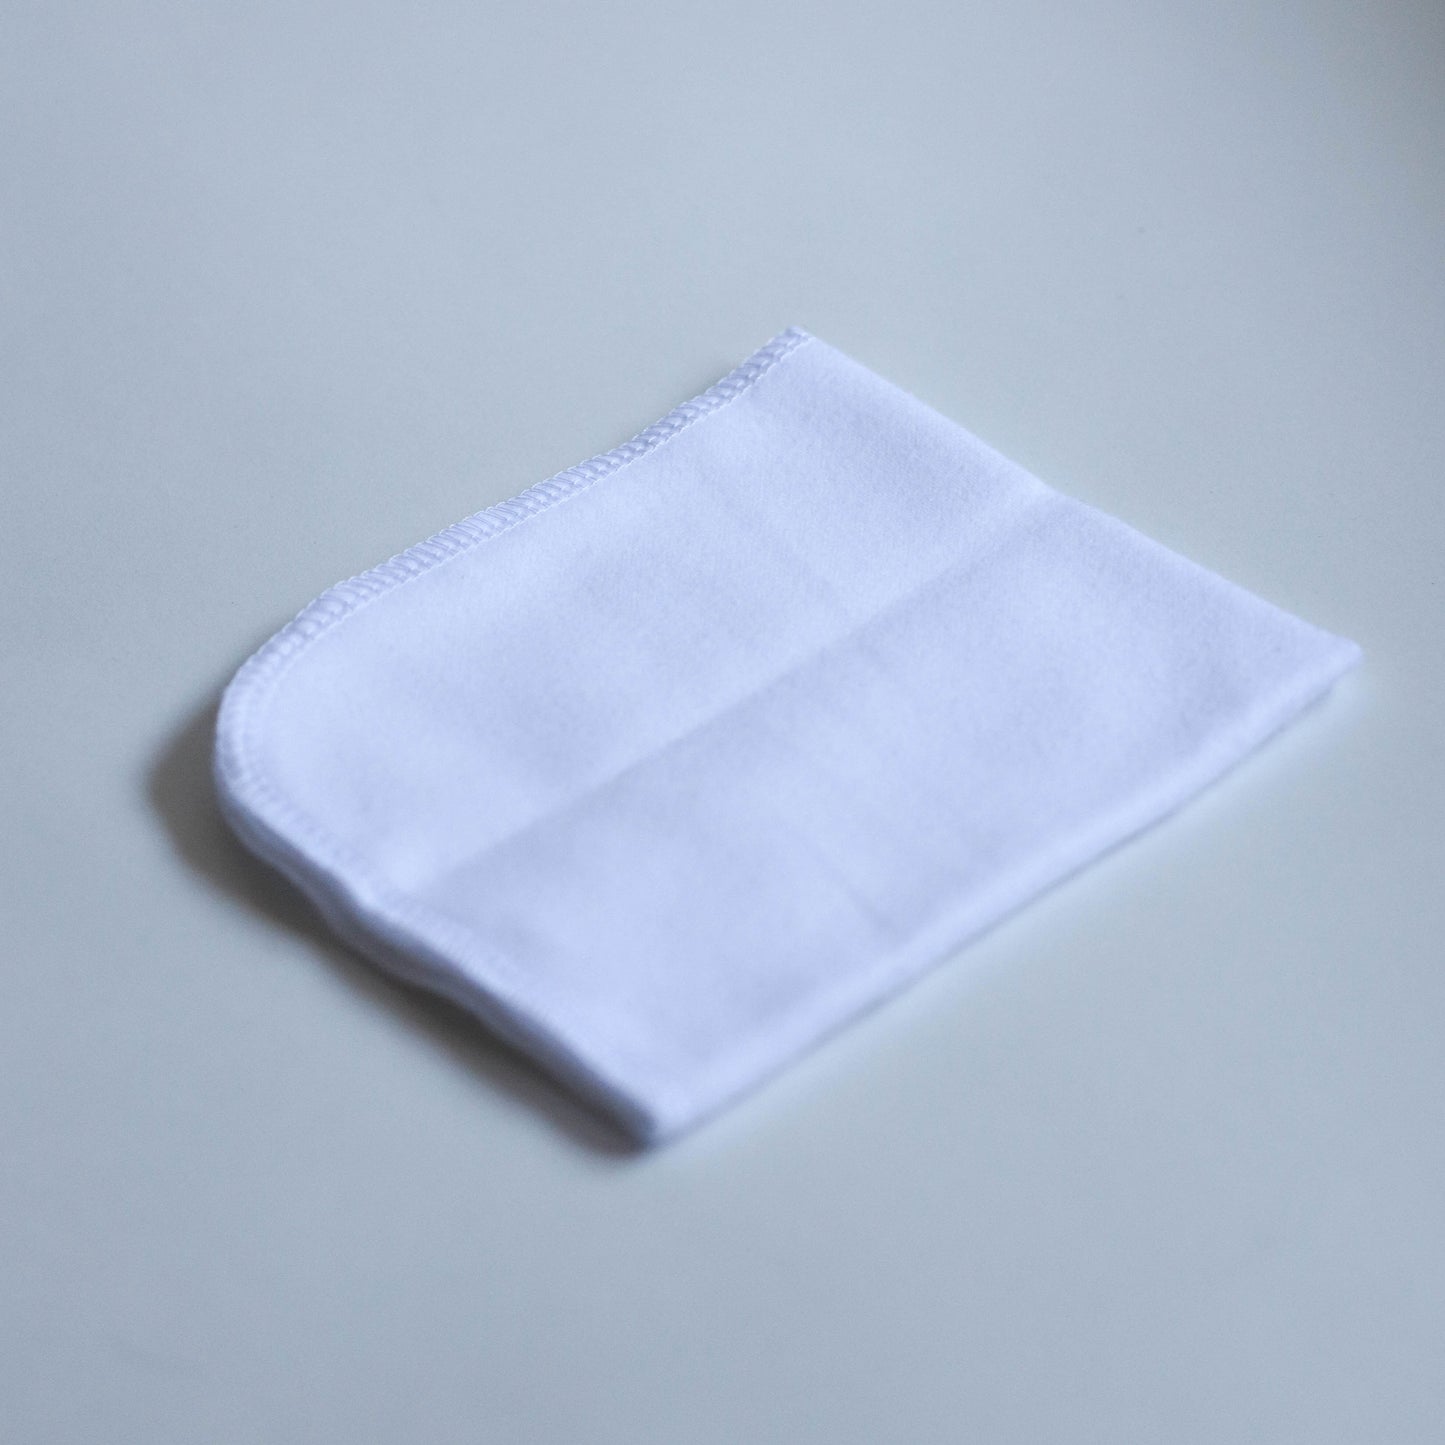 Unpaper Towels (6 pack)